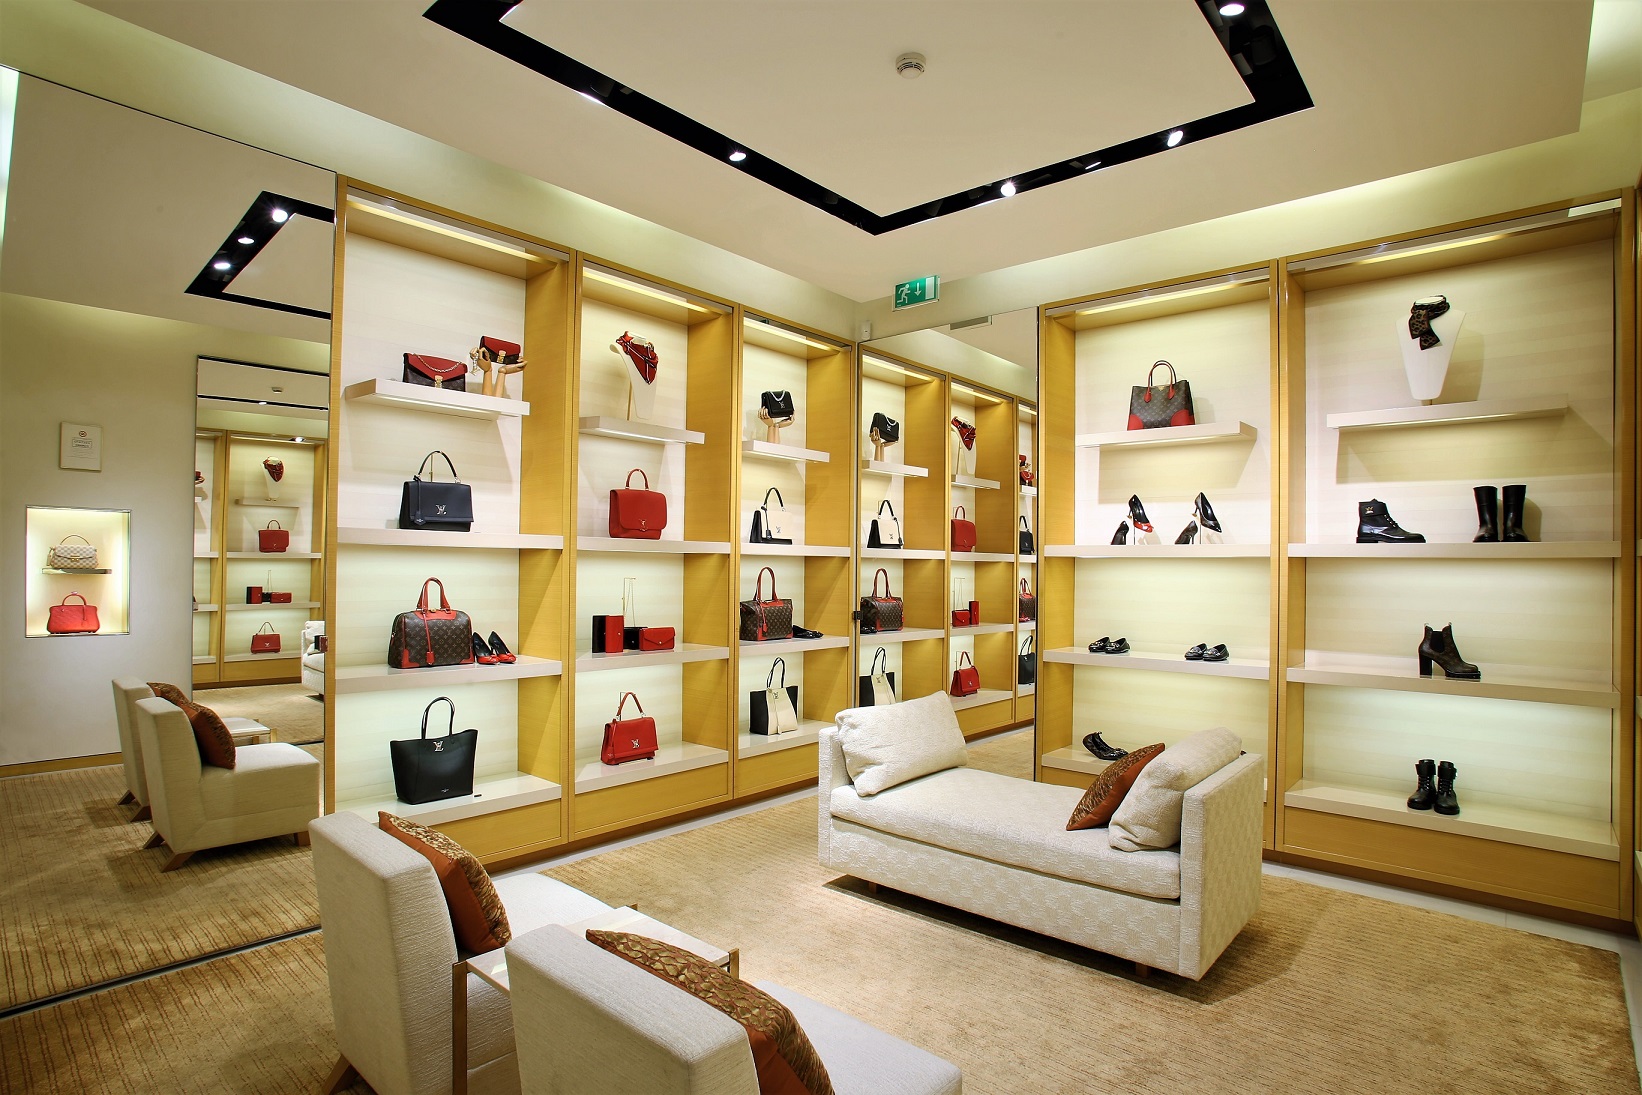 Louis Vuitton - Borsa a secchiello Noe, Luxury Fashion